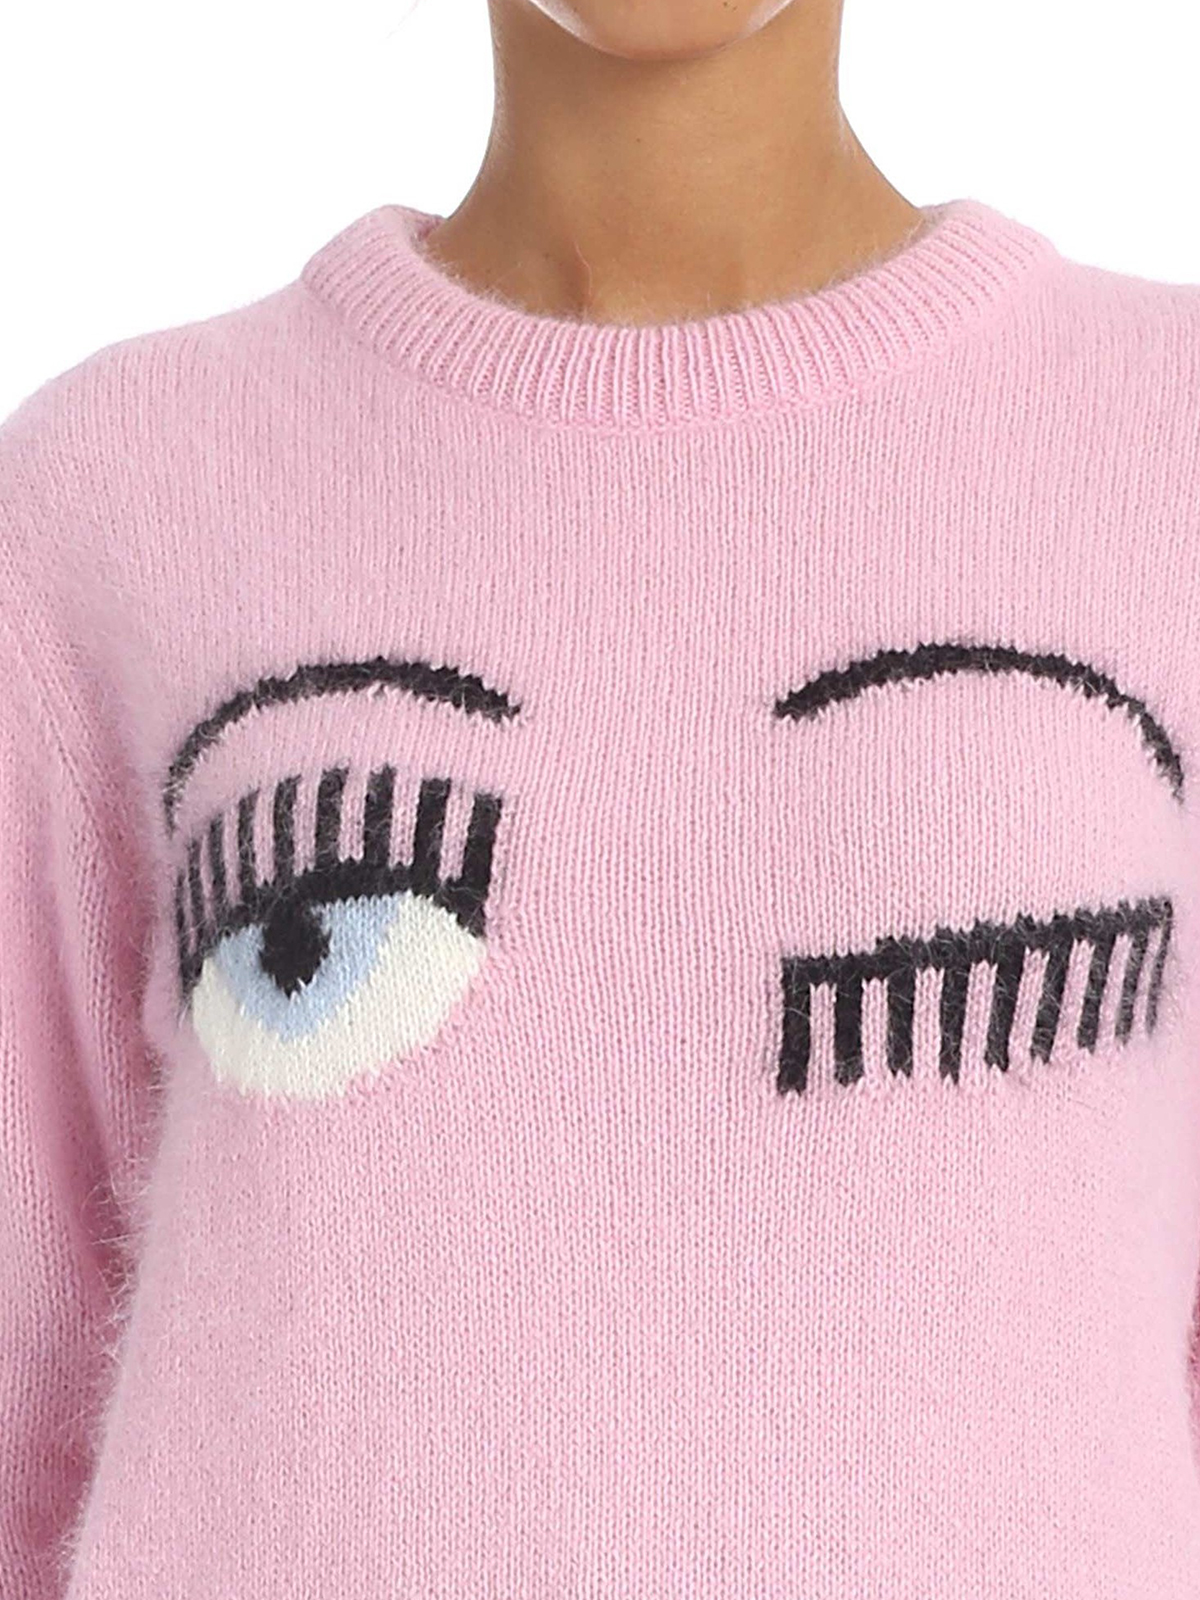 collar tool unhealthy Crew necks Chiara Ferragni - Flirting pink angora sweater - CFJM030PINK